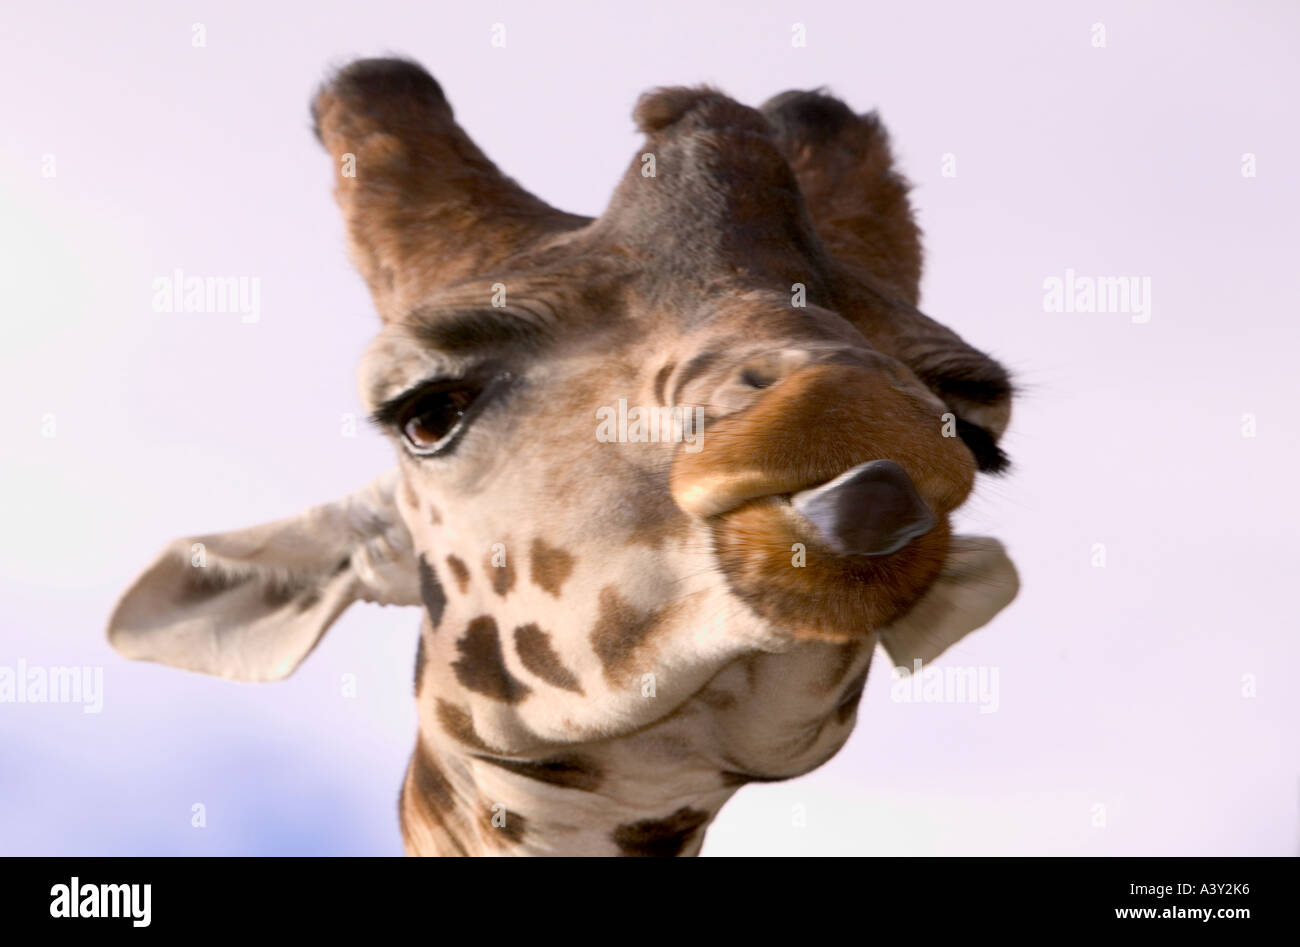 a Giraffe sticking its tongue out Stock Photo